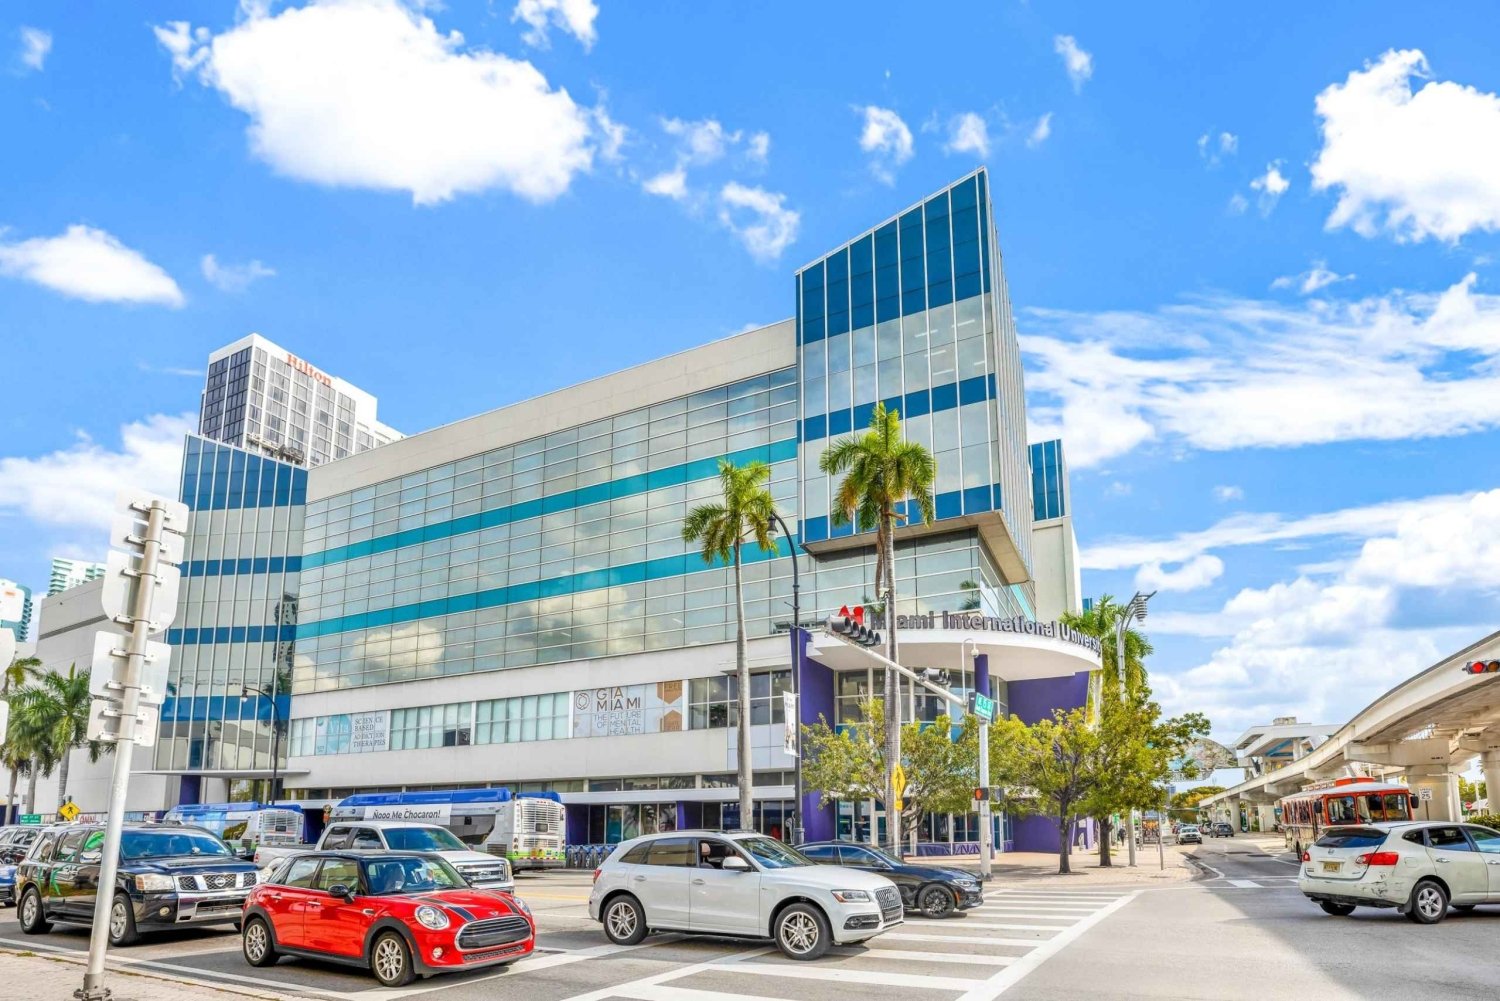 Miami: Cruise Line Lounge-adgang og bagageopbevaring